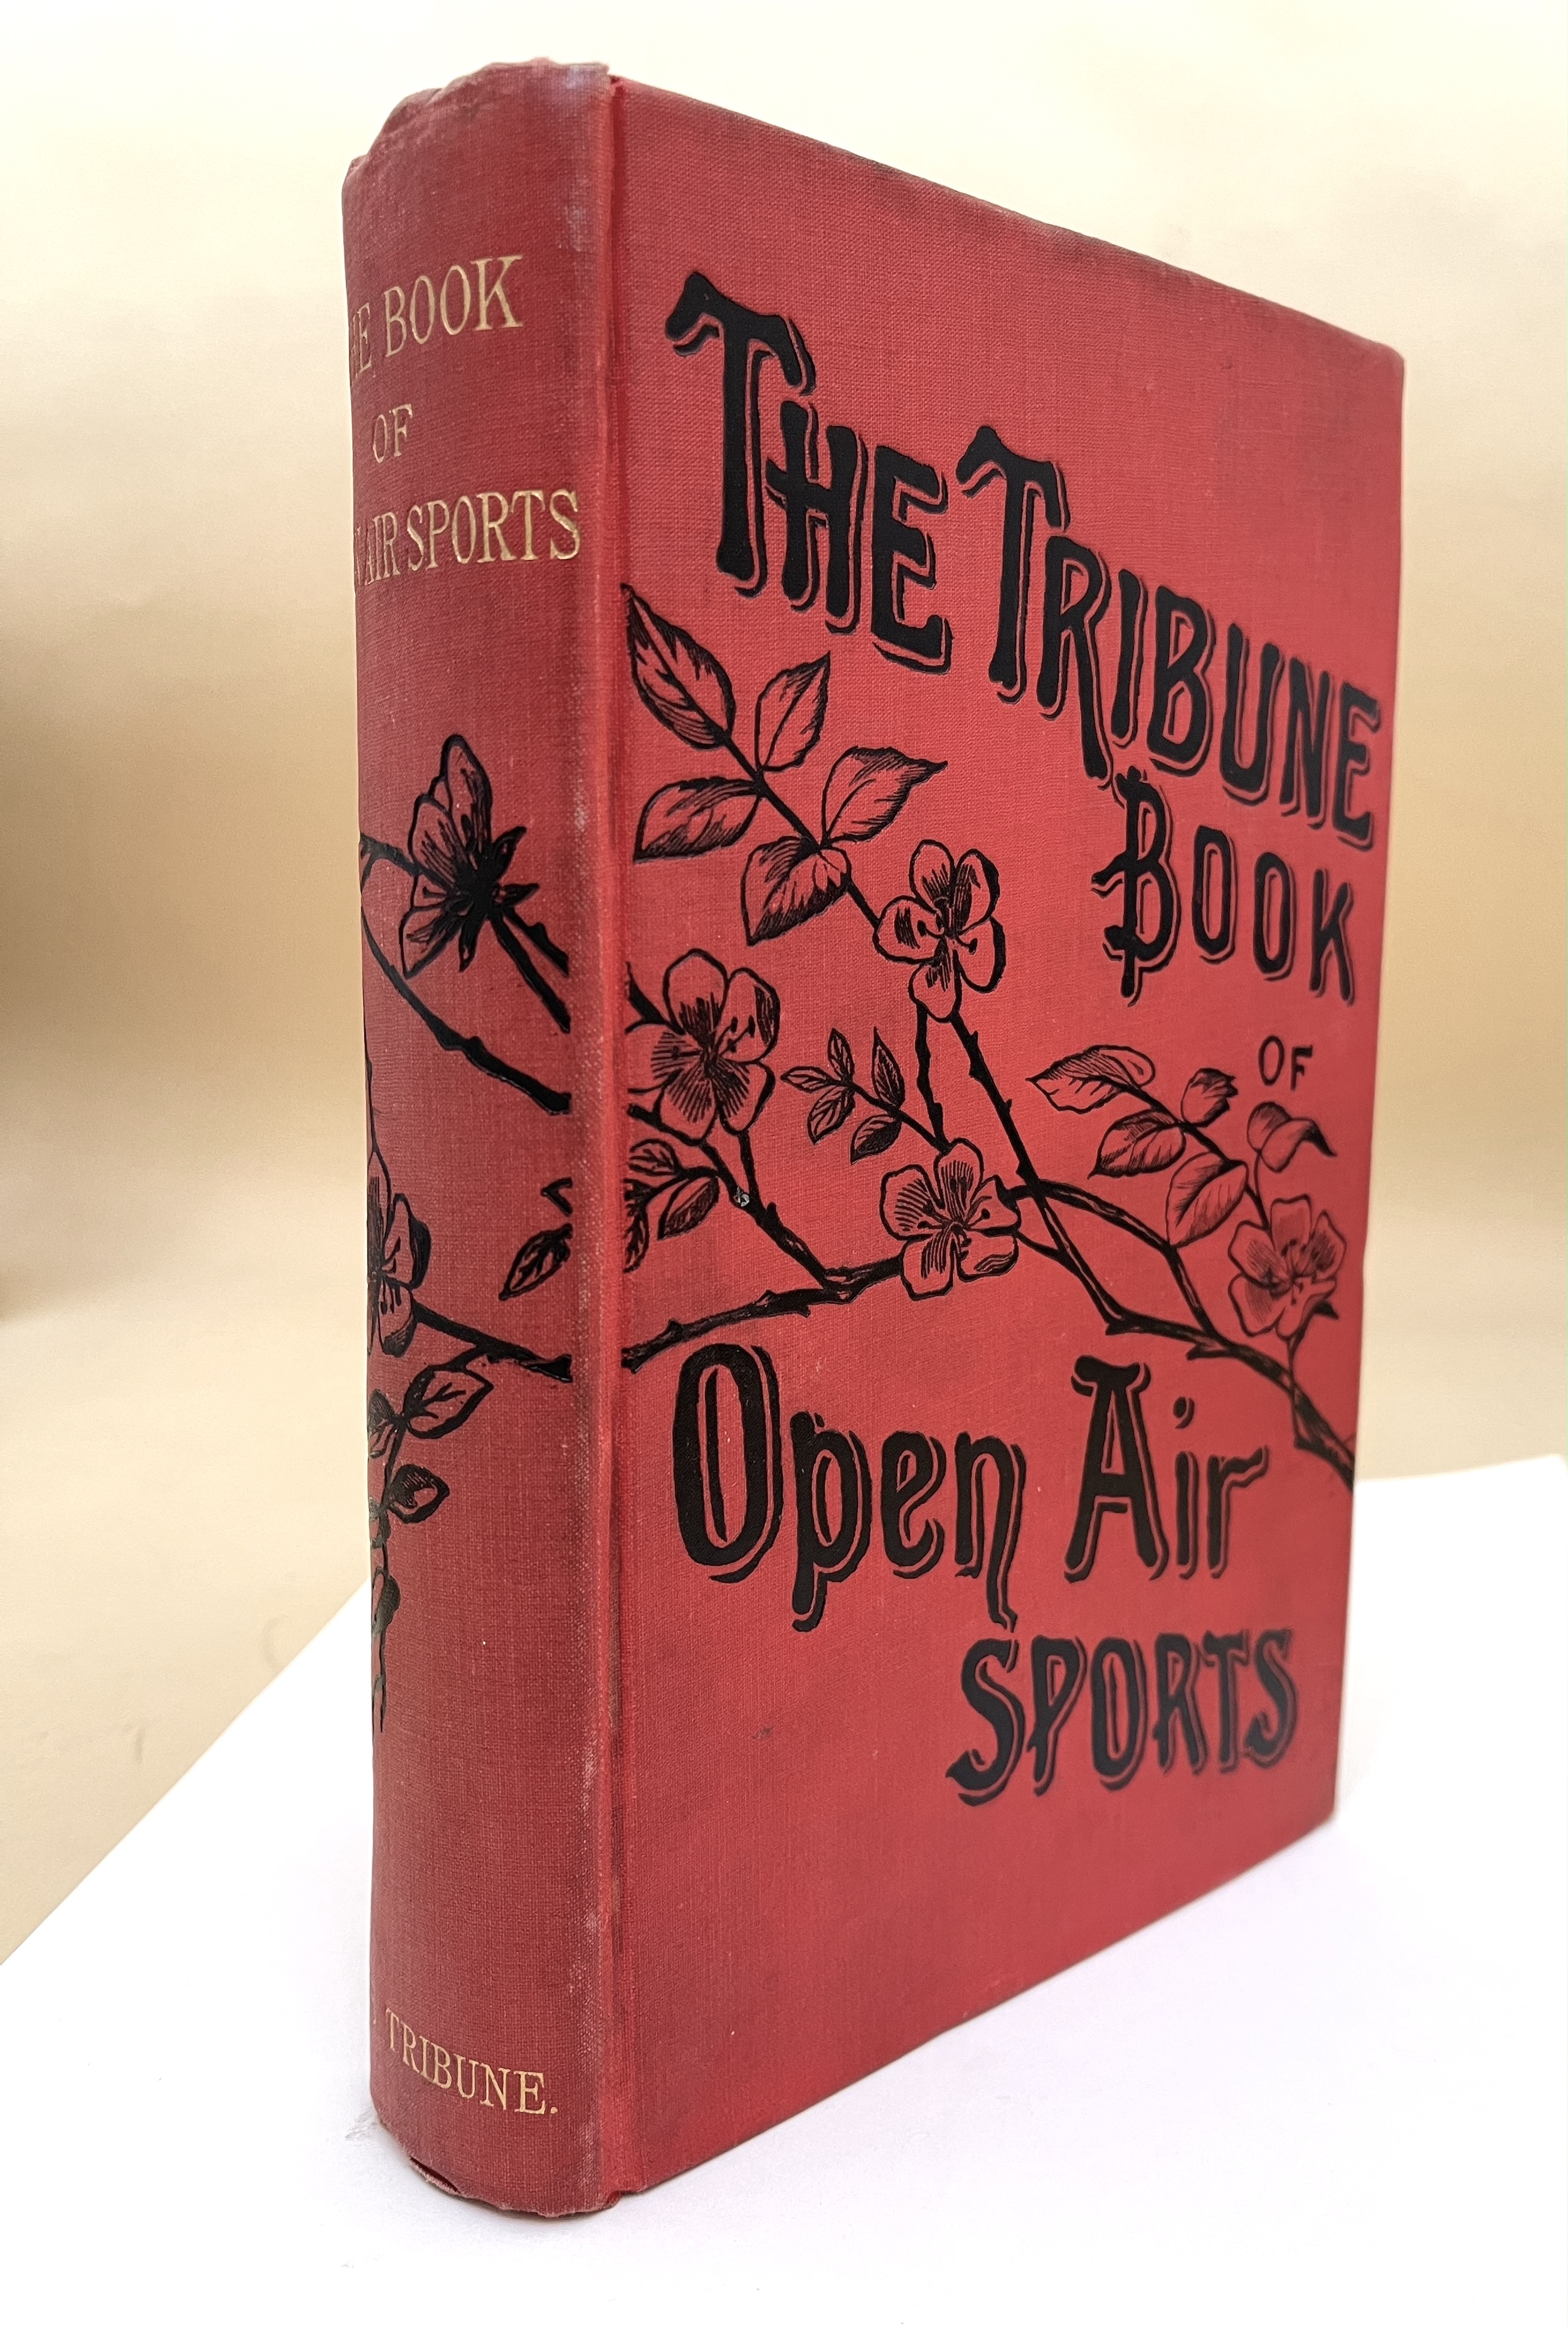 Tribune Book of Open Air Sports original red cloth binding